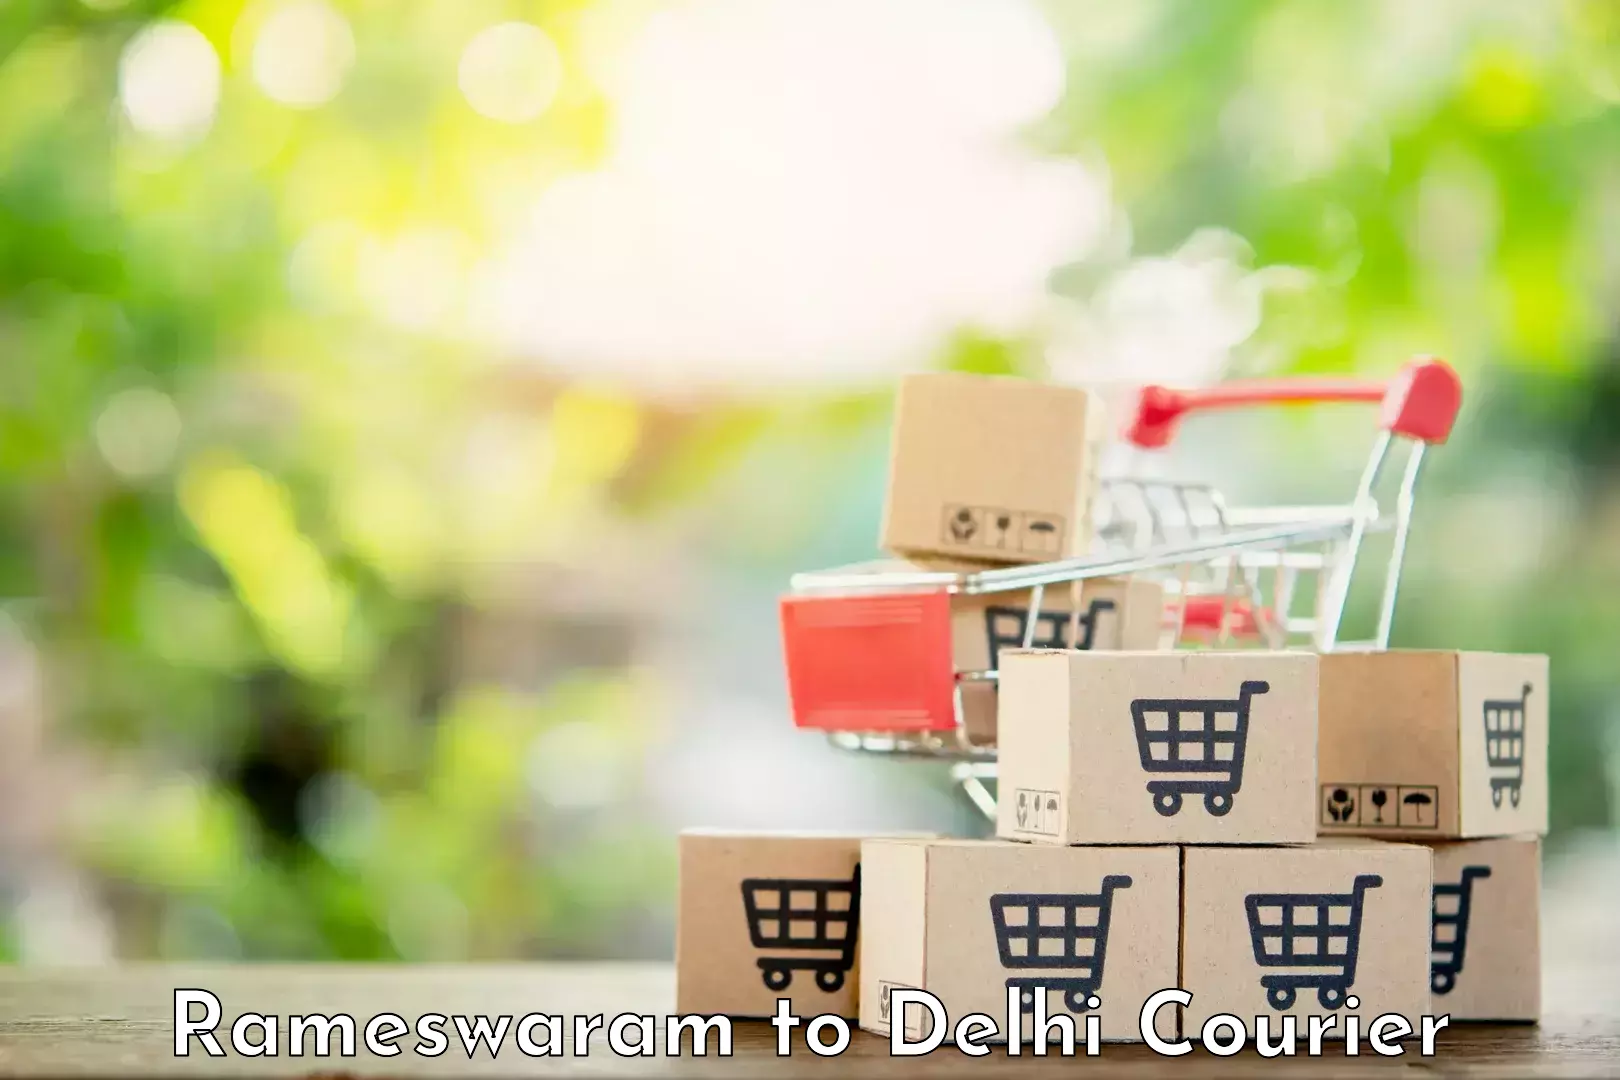 Business delivery service Rameswaram to Delhi